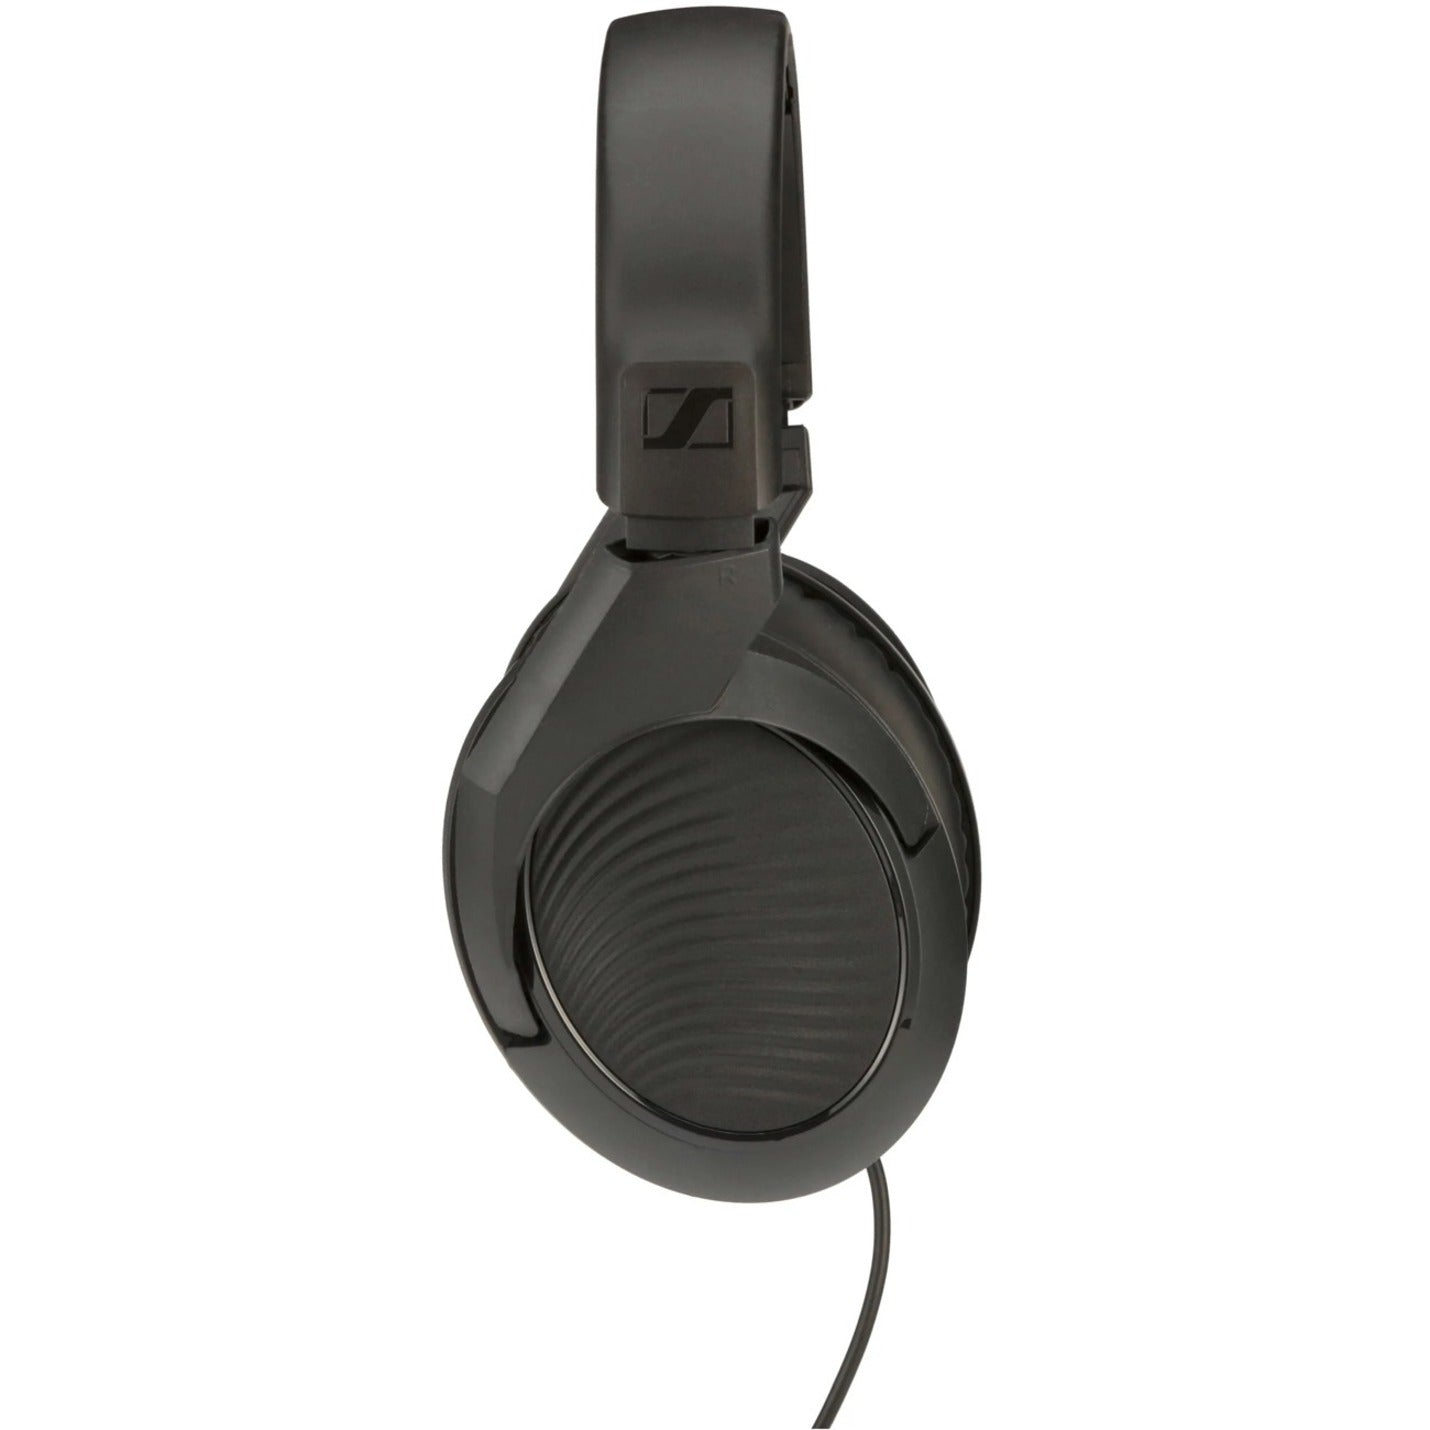 Sennheiser 507182 HD 200 PRO Headphone, Noise Reduction, Comfortable, Over-the-head, Music, Home, Studio